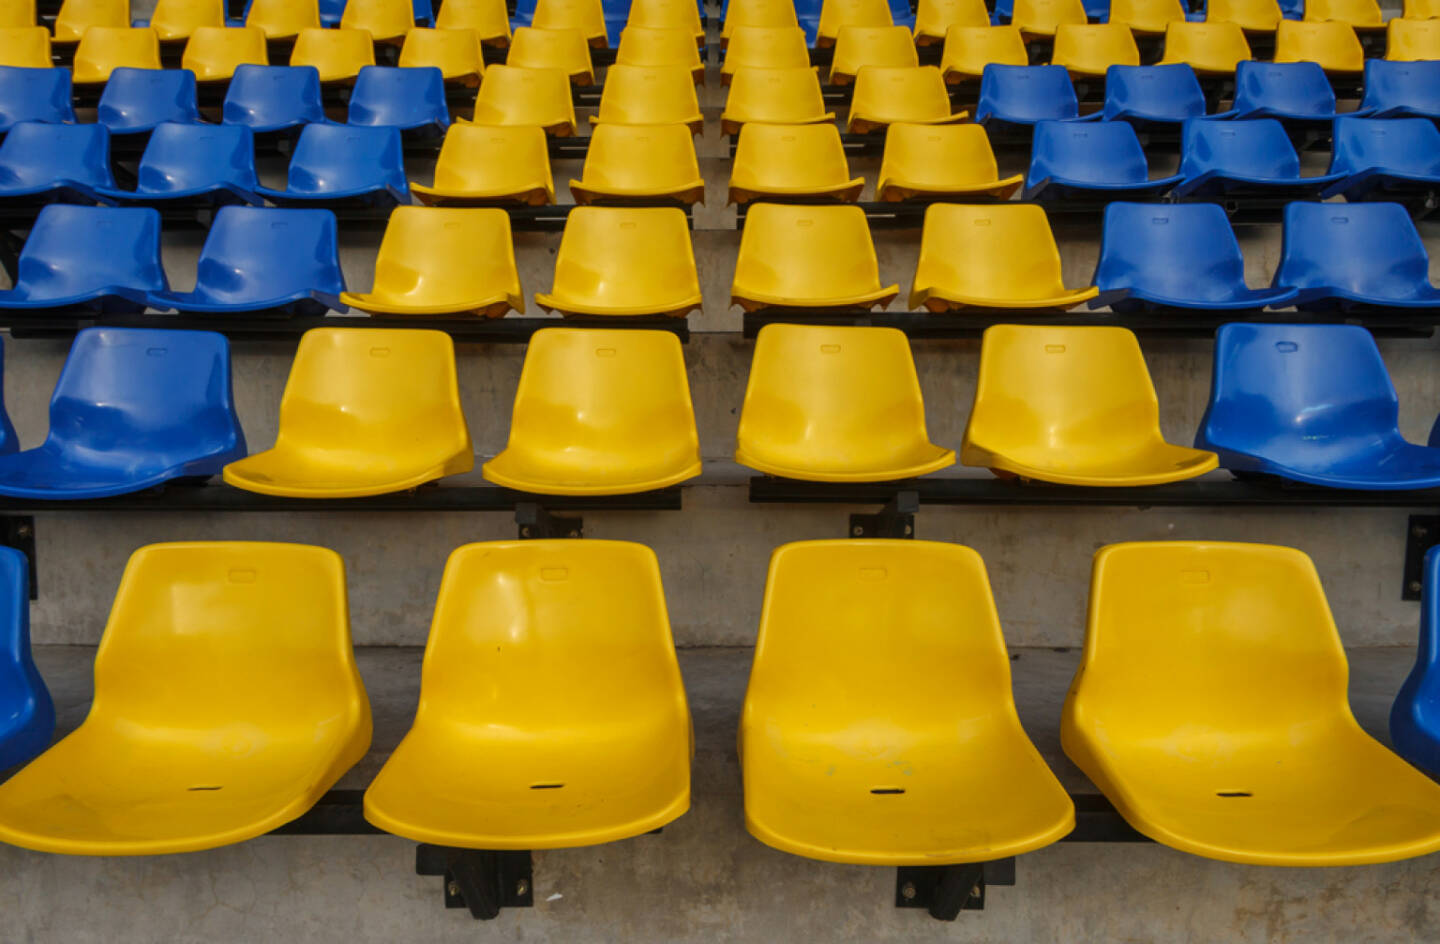 Sitze, leere Sitze, Stadion, blau-geb, Ukraine, Niederösterreich, http://www.shutterstock.com/de/pic-149163947/stock-photo-sport-stadium.html (Bild: shutterstock.com)